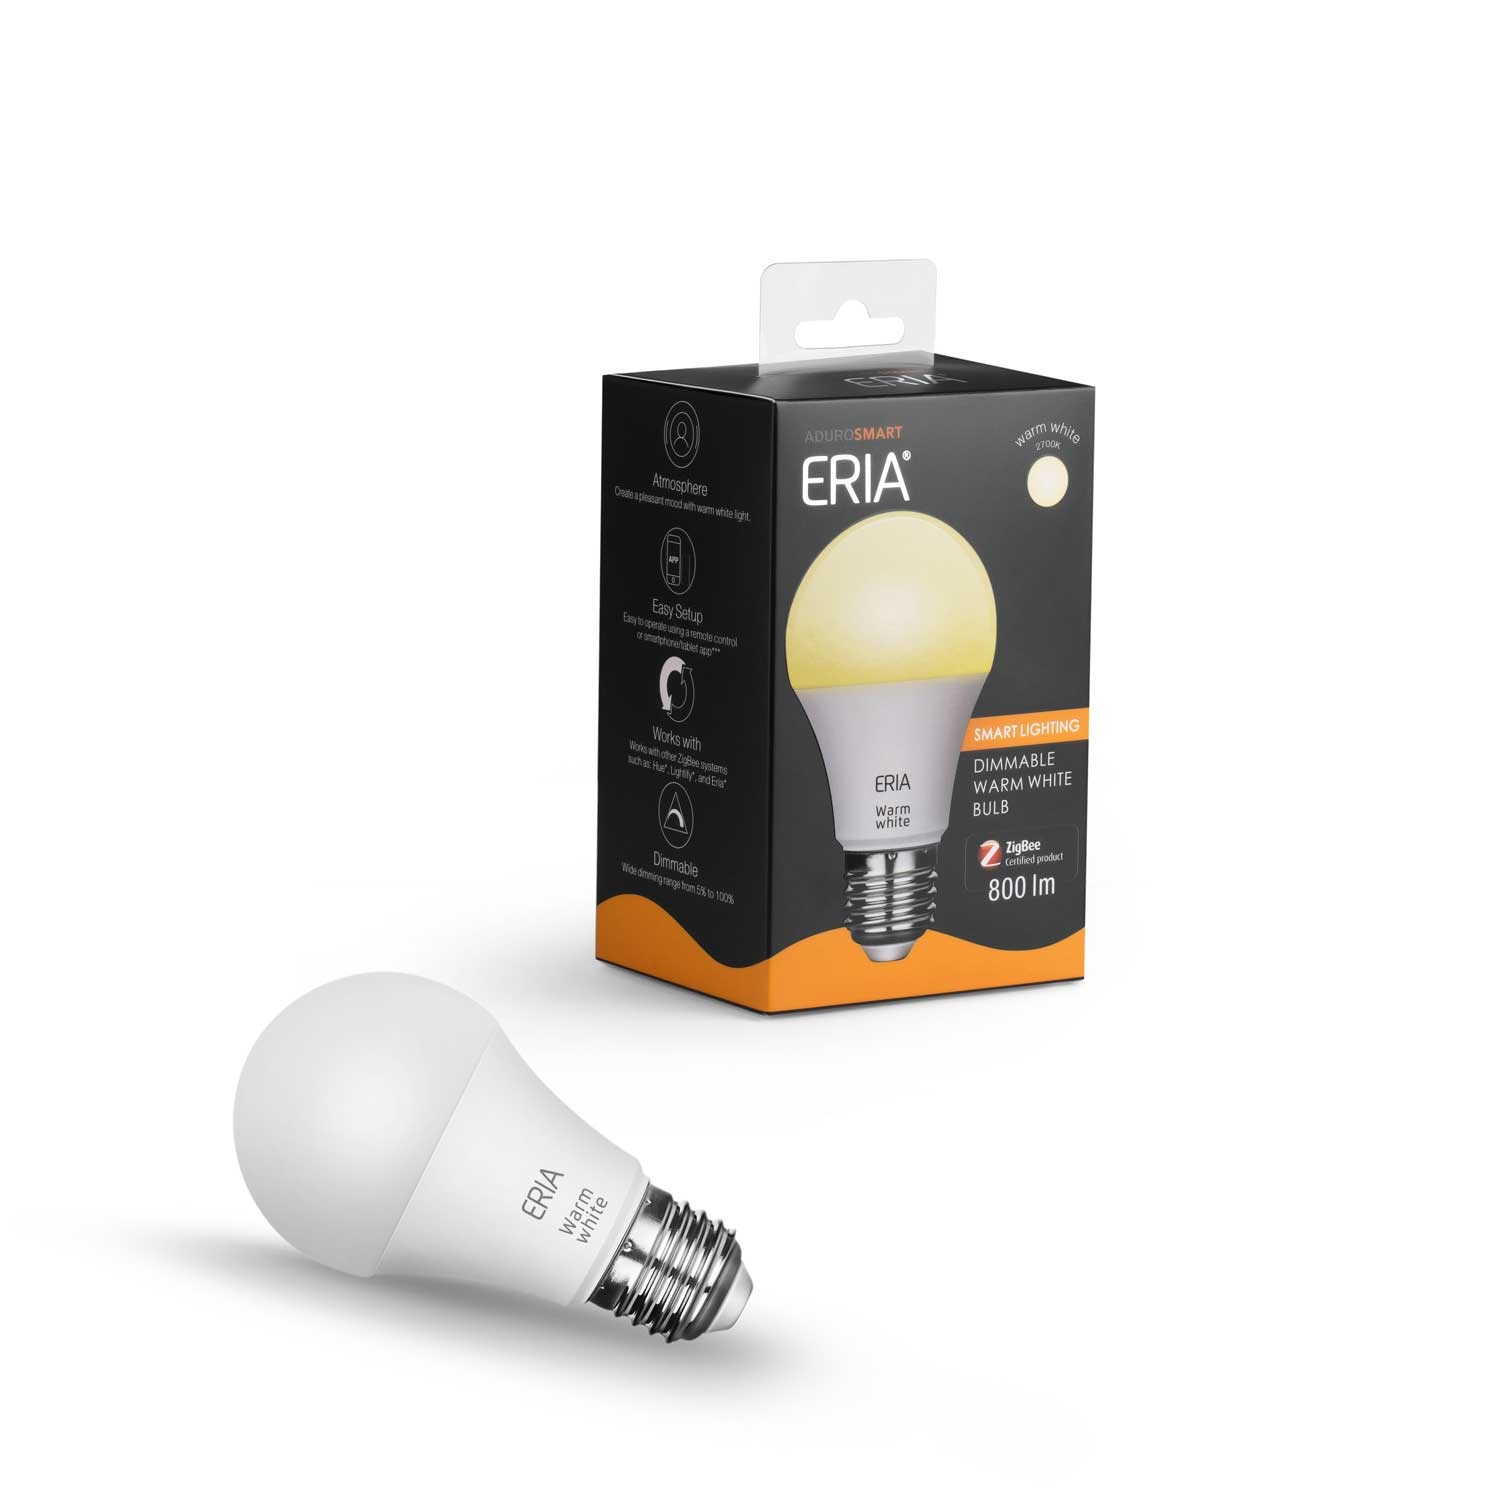 AduroSmart ERIA® E27 lamp Warm white - 2700K - warm wit licht - Zigbee Smart Lamp - werkt met o.a. Adurosmart, Hue en Google Home